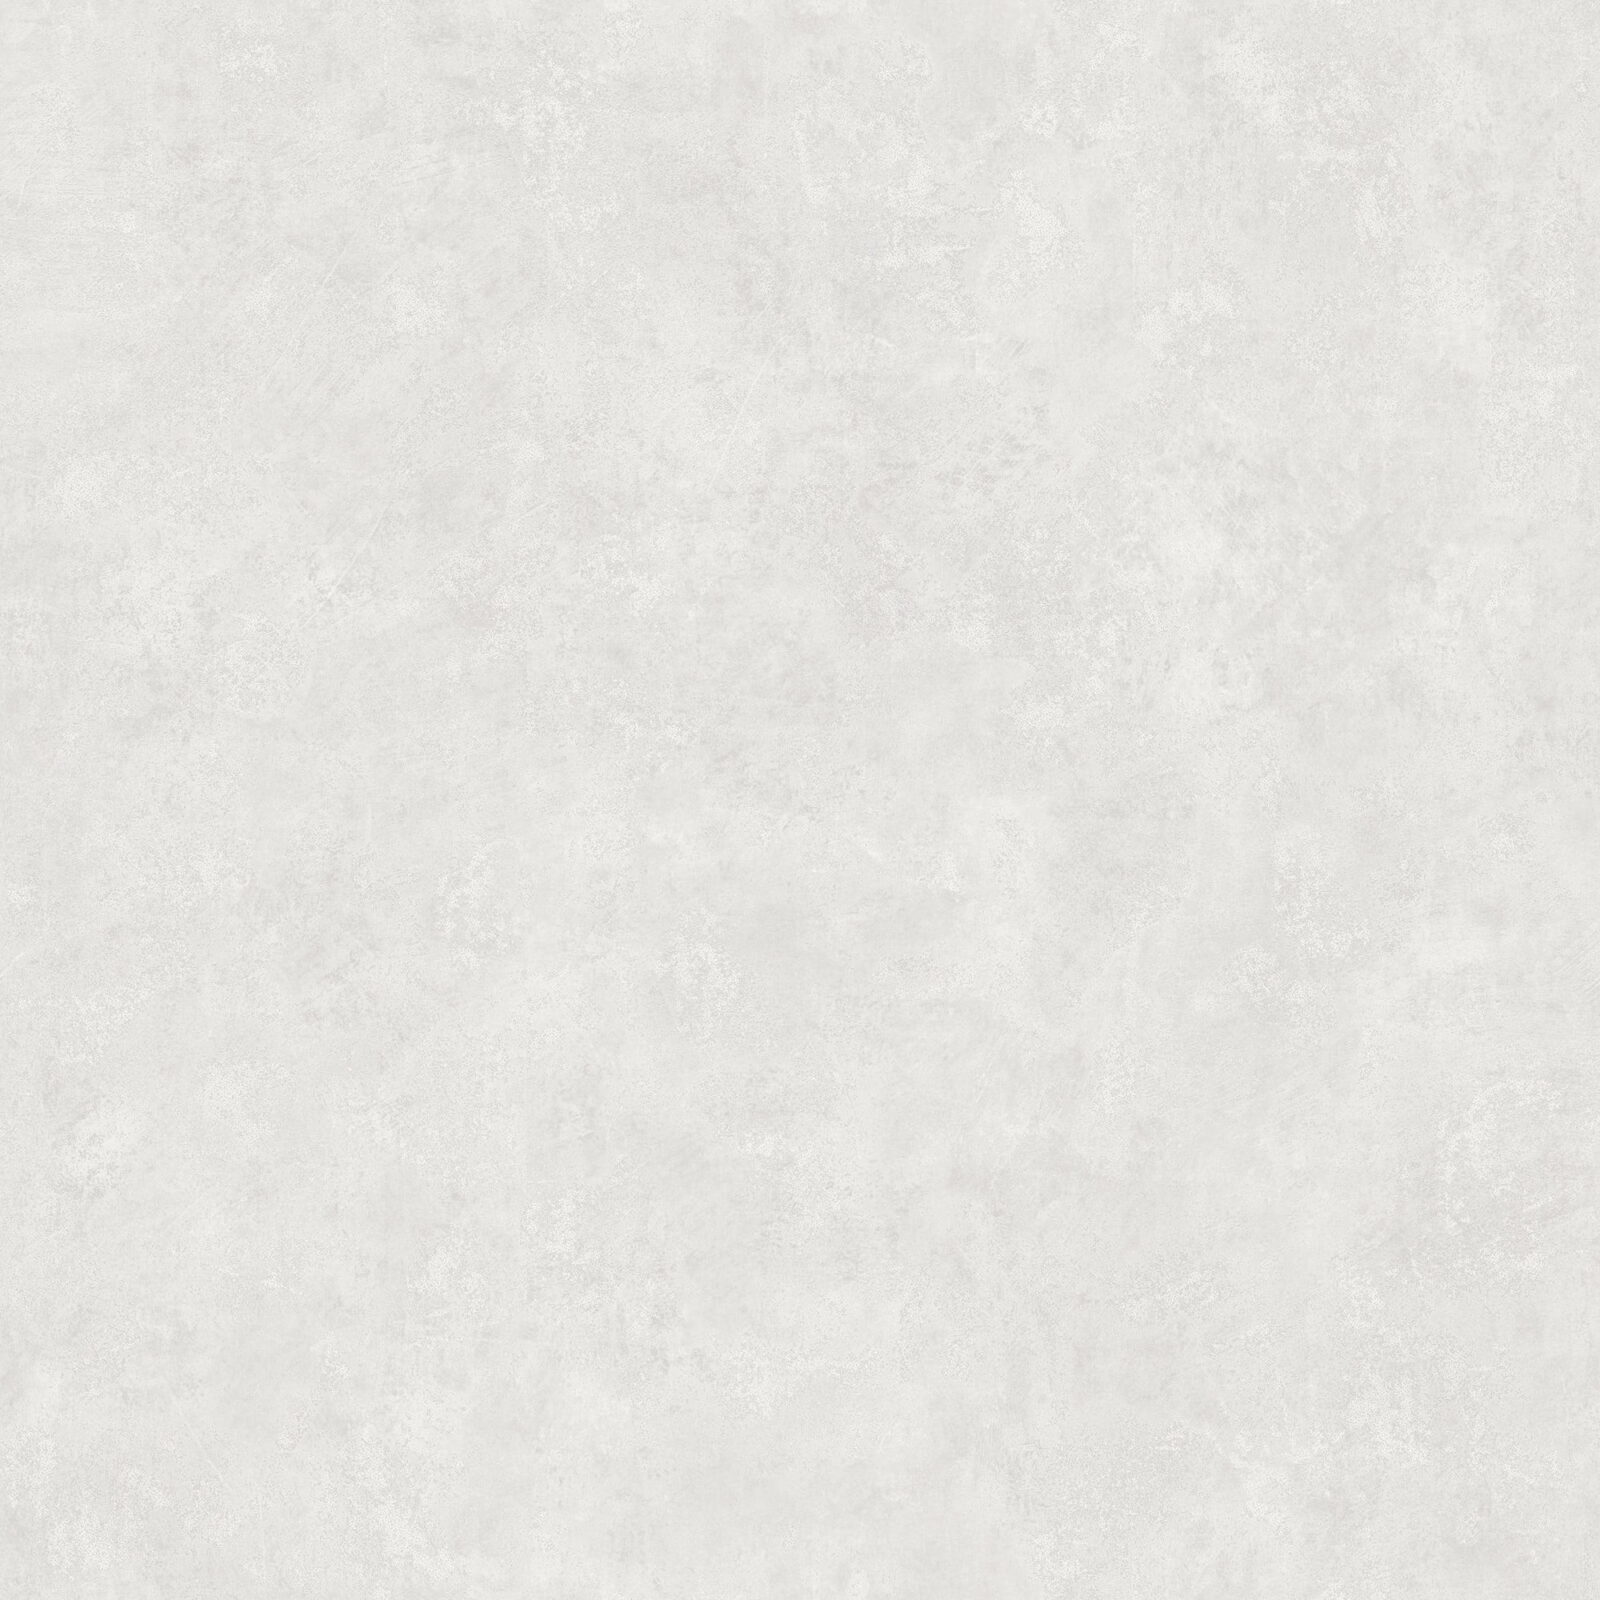 Kalk Wallpaper in Gray by Sandberg Wallpaper